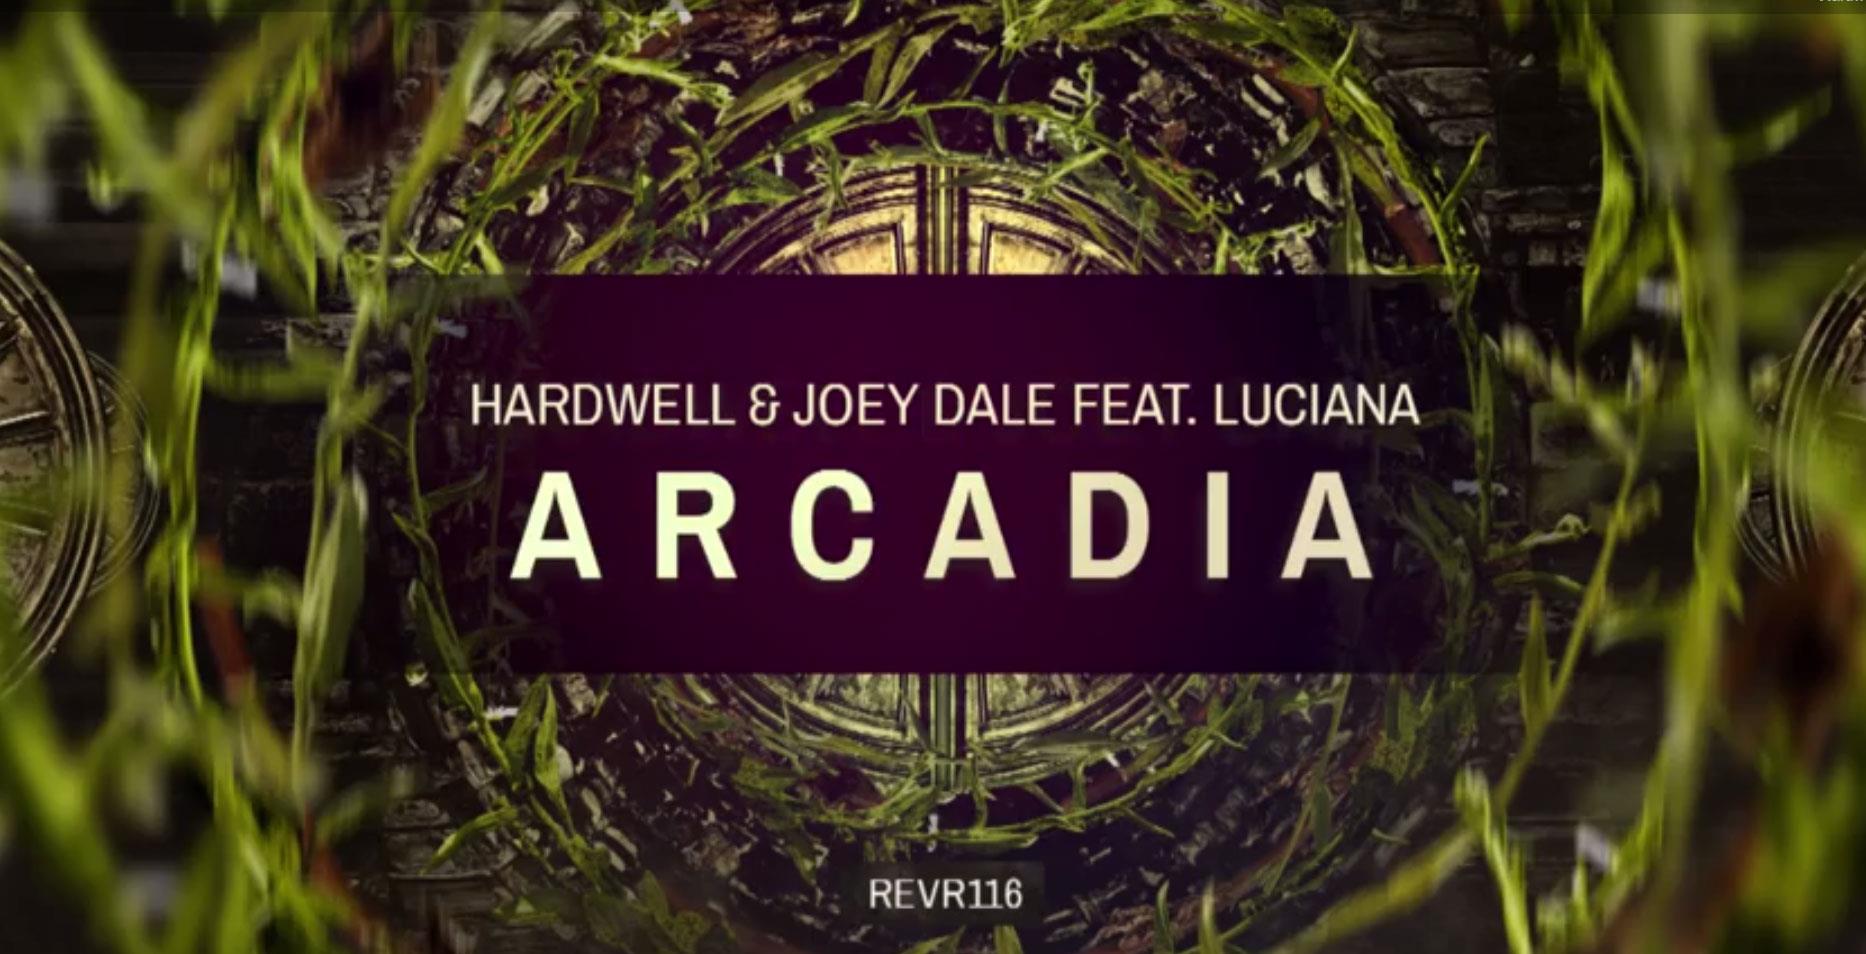 Il  video di Hardwell & Joey Dale feat. Luciana Arcadia